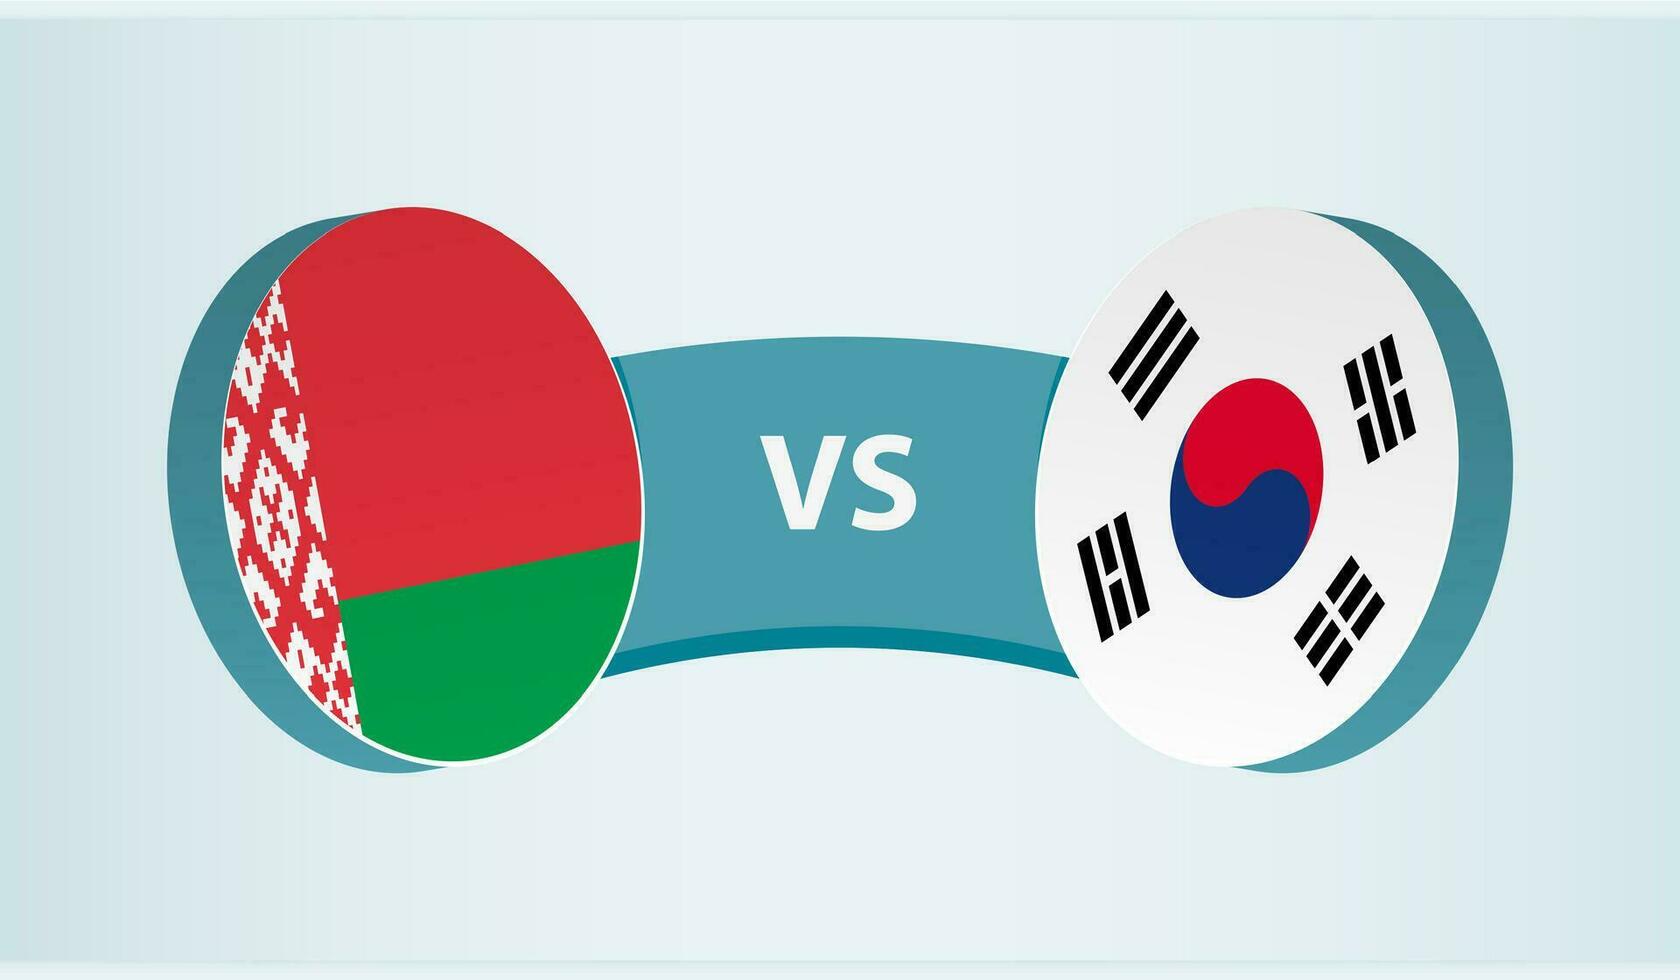 Belarus versus South Korea, team sports competition concept. vector